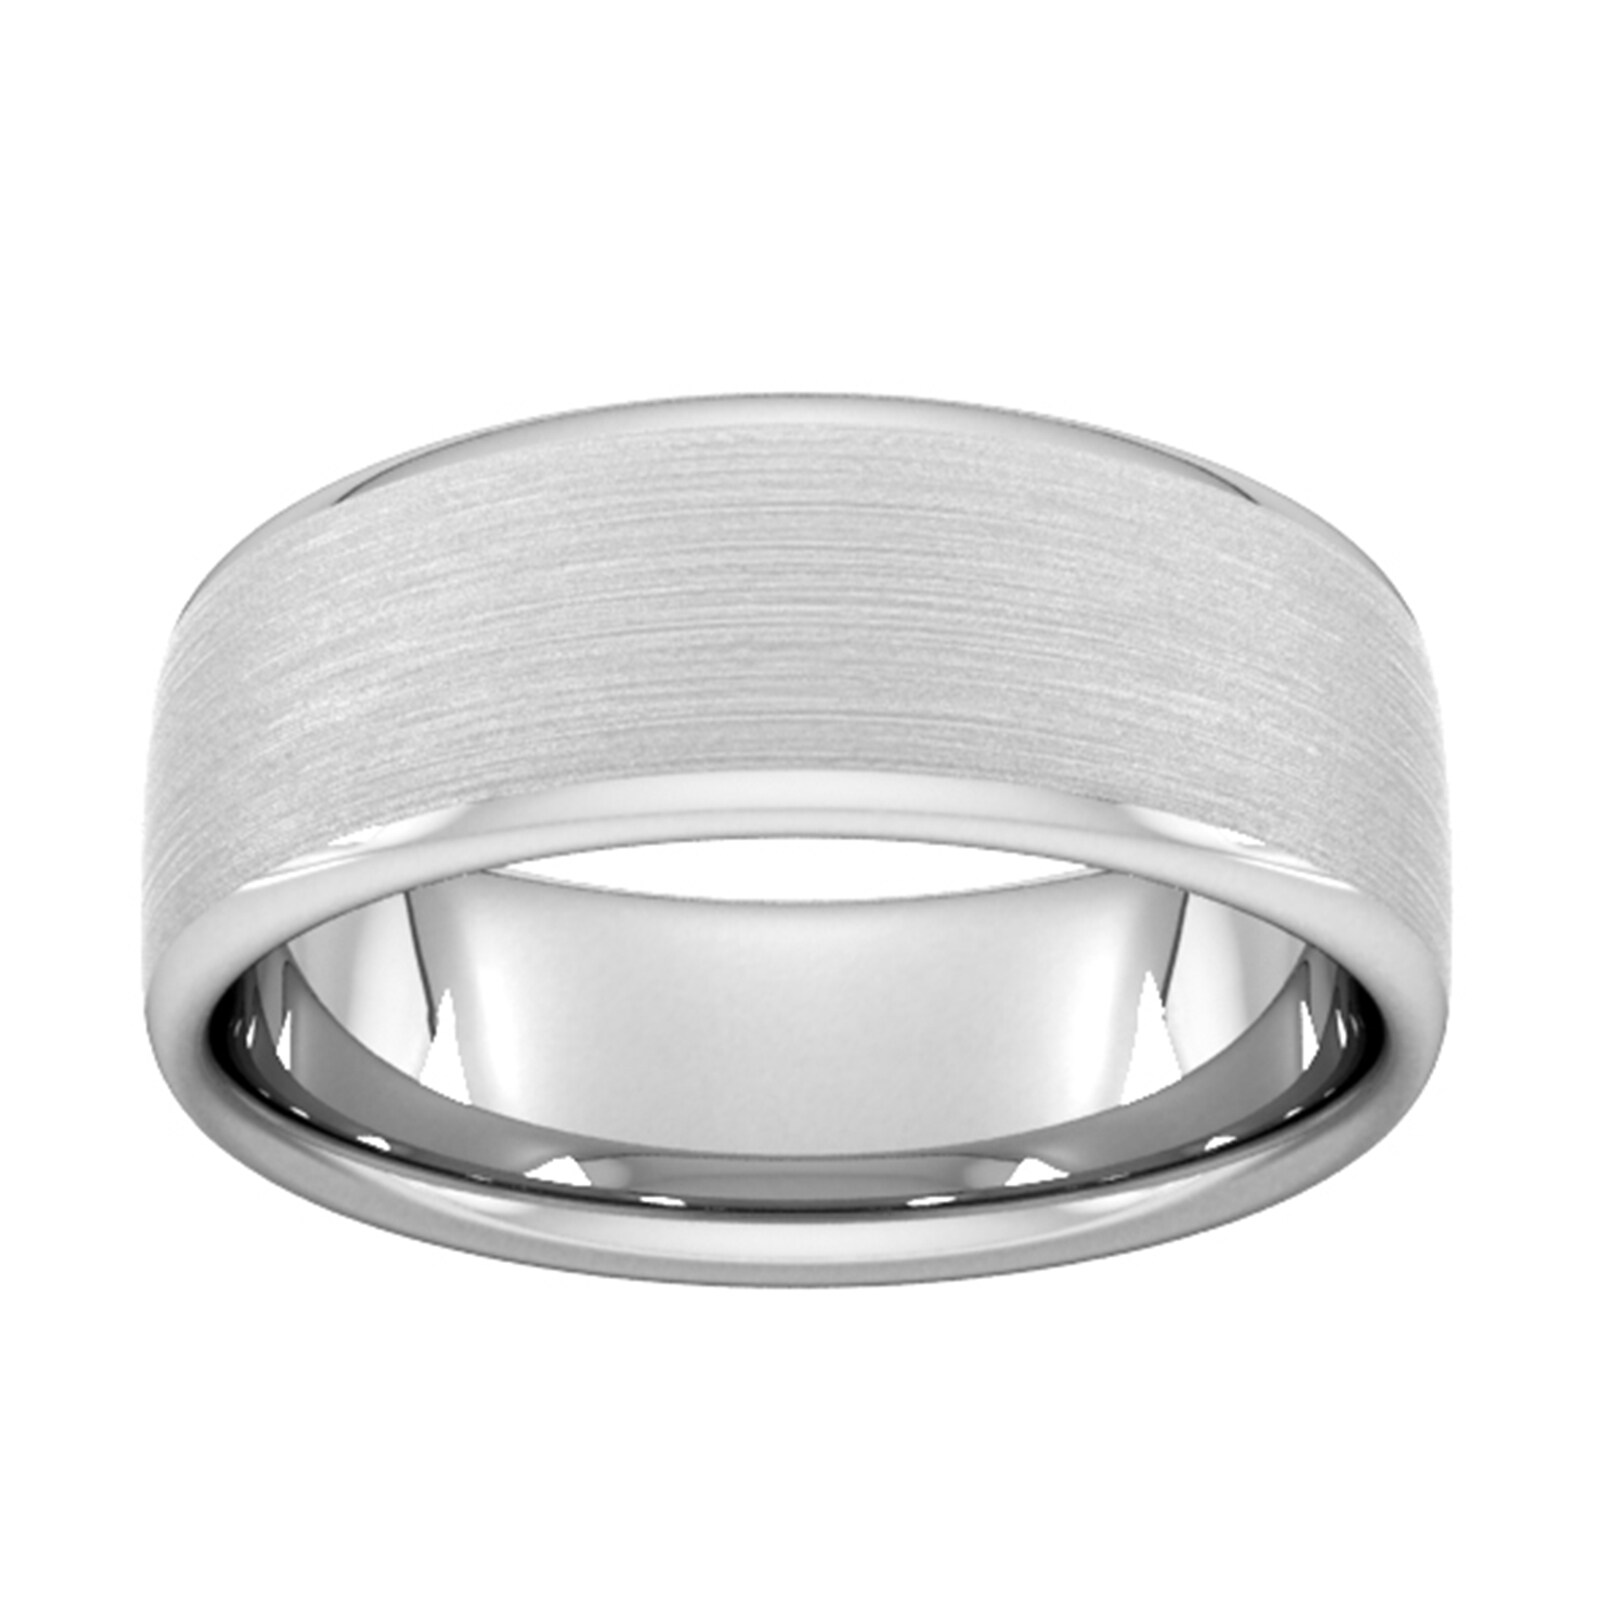 8mm Slight Court Standard Matt Finished Wedding Ring In 950 Palladium - Ring Size S